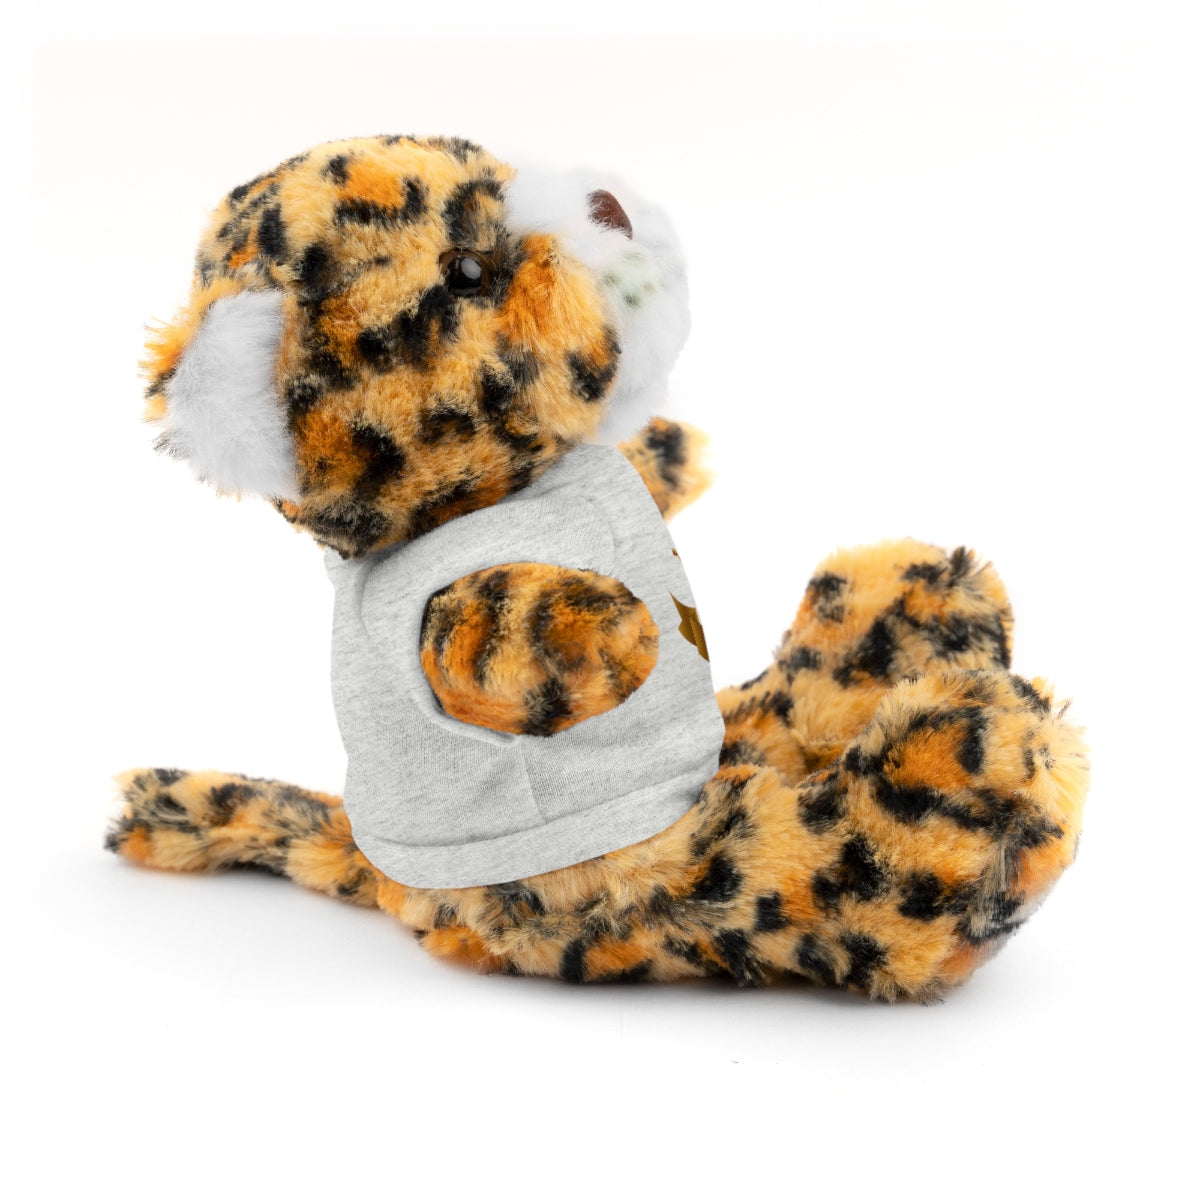 TLOD(Crown) Stuffed Animals with Tee